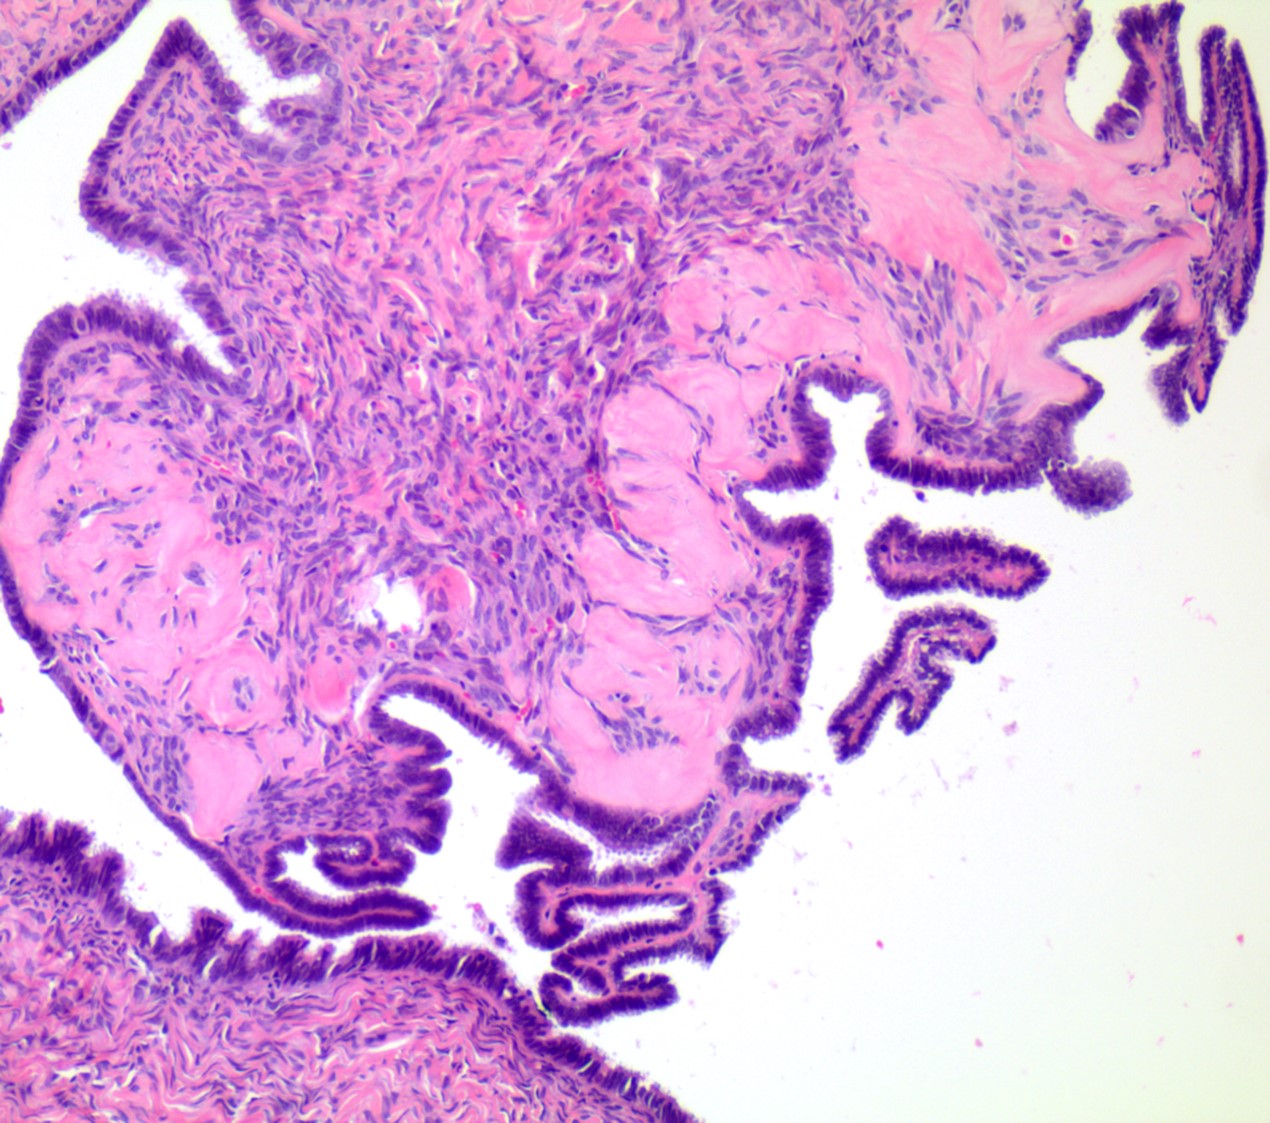 Serous cystadenoma with focal epithelial proliferation